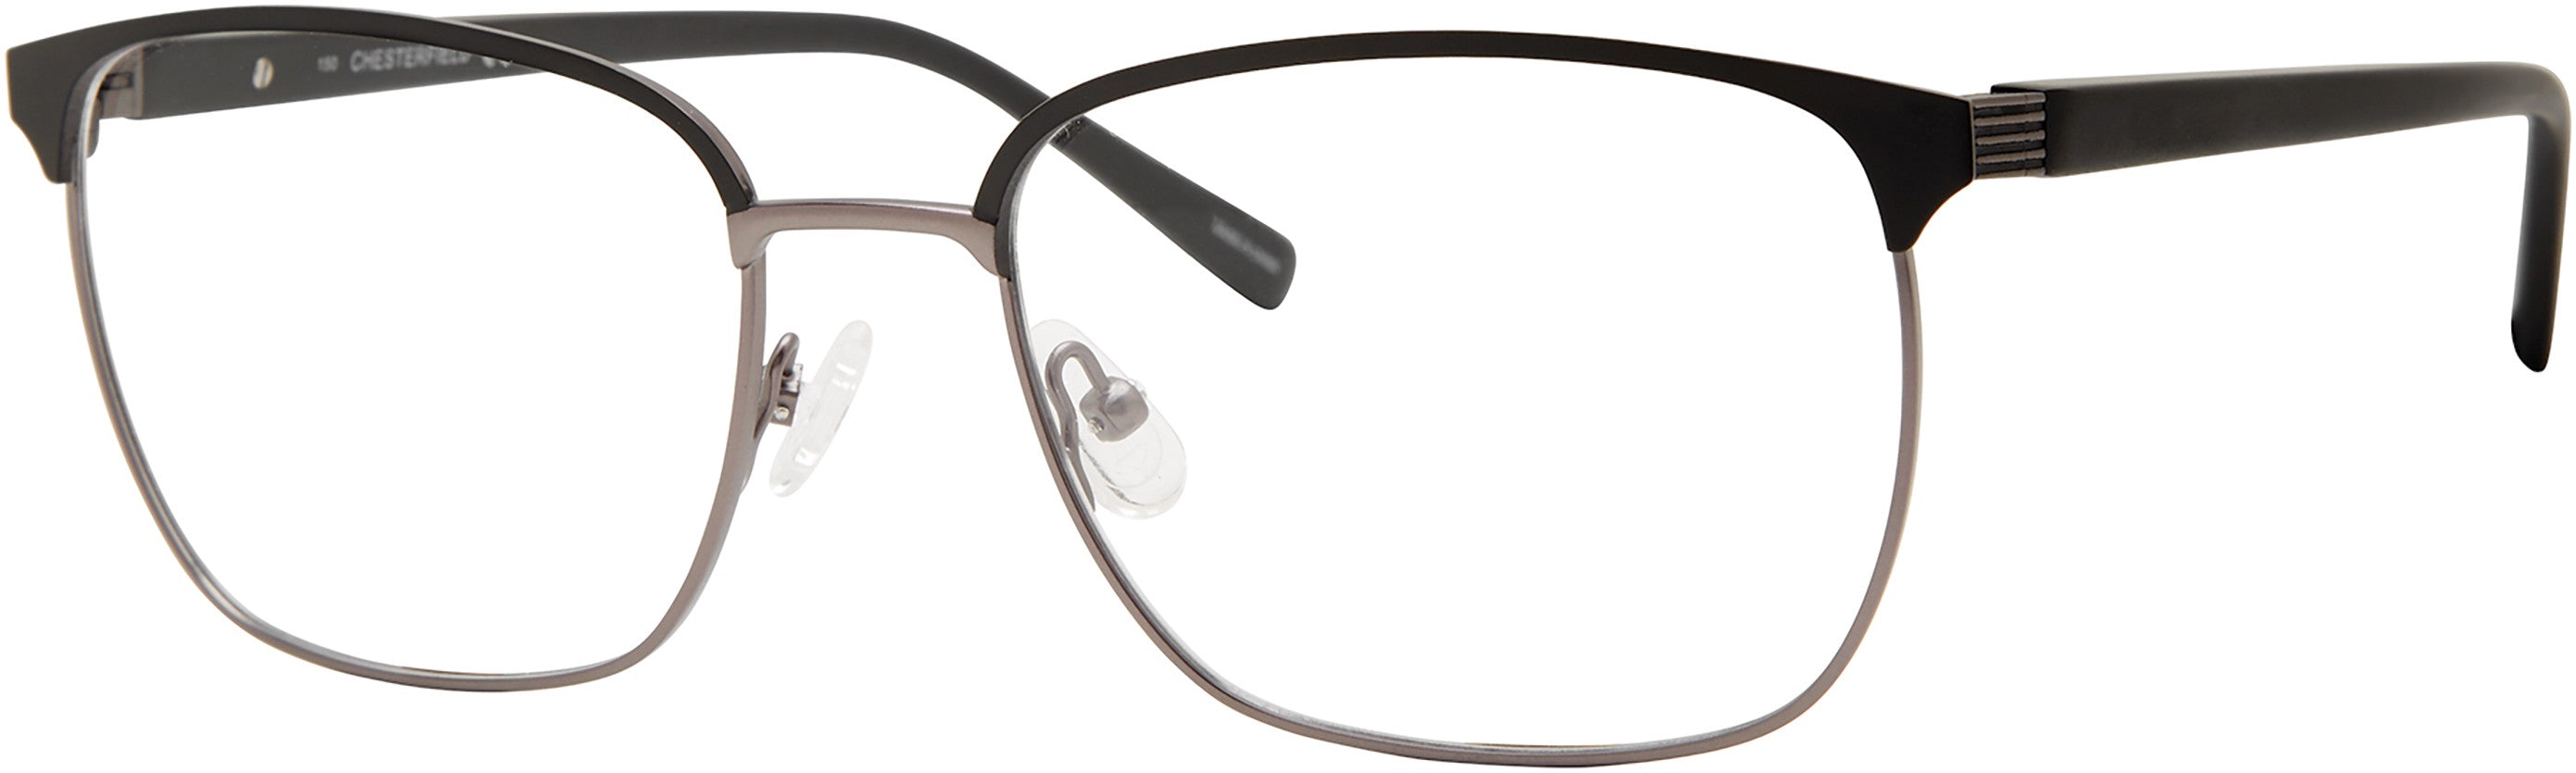  Chesterfield 72XL Square Eyeglasses 0003-0003  Matte Black (00 Demo Lens)